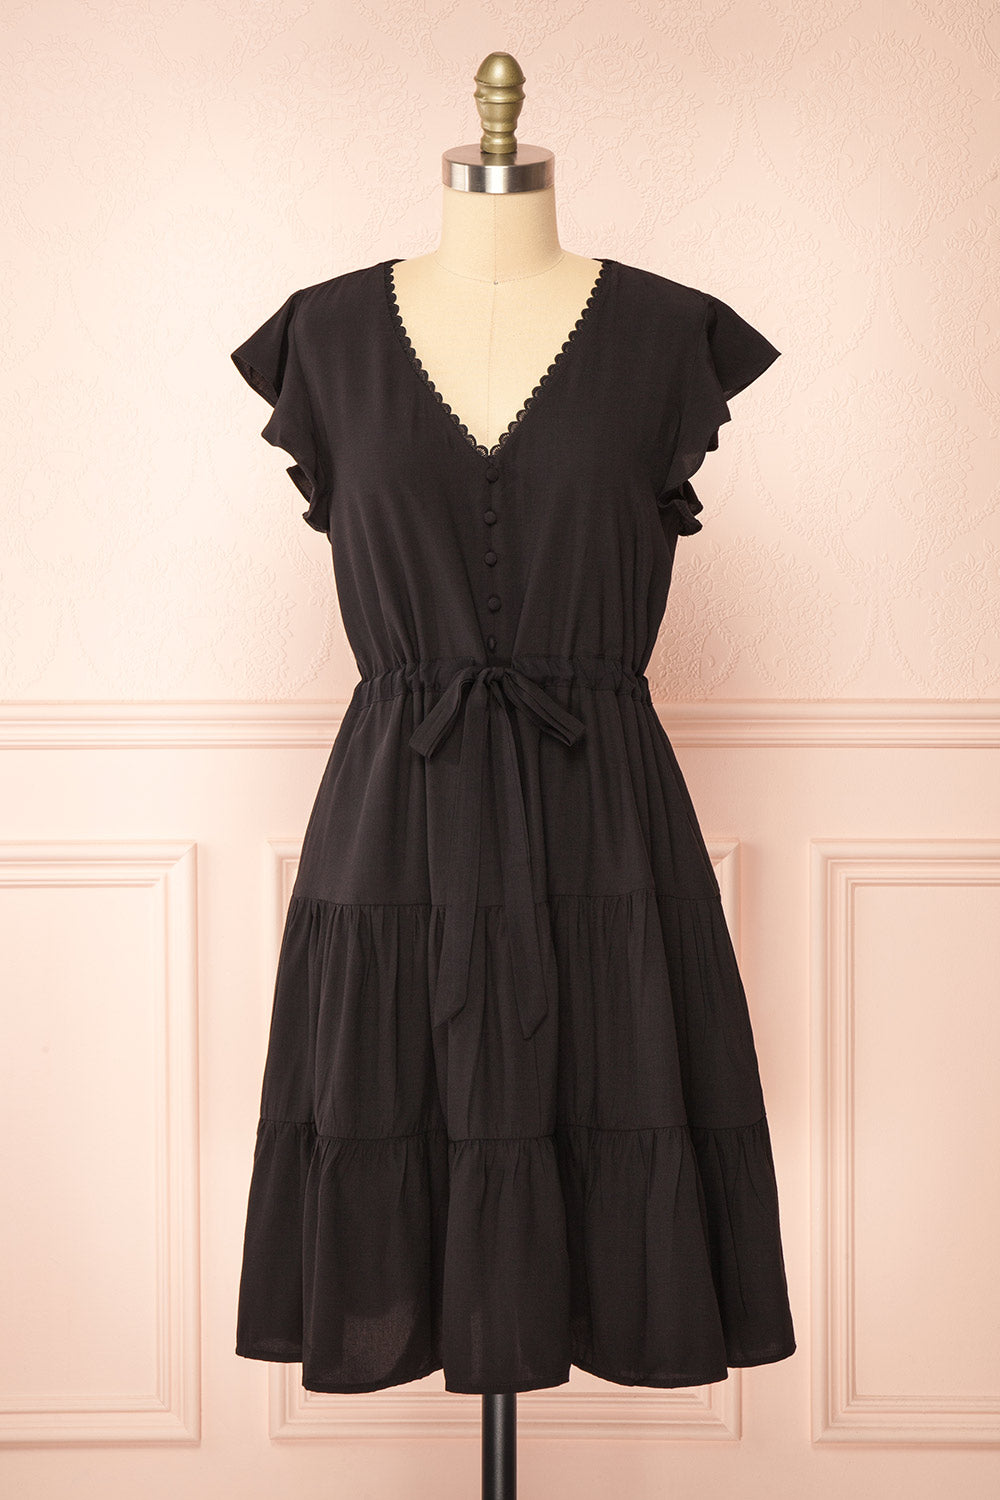 Selenia Black A-line Dress w/ Adjustable Waist | Boutique 1861 front view